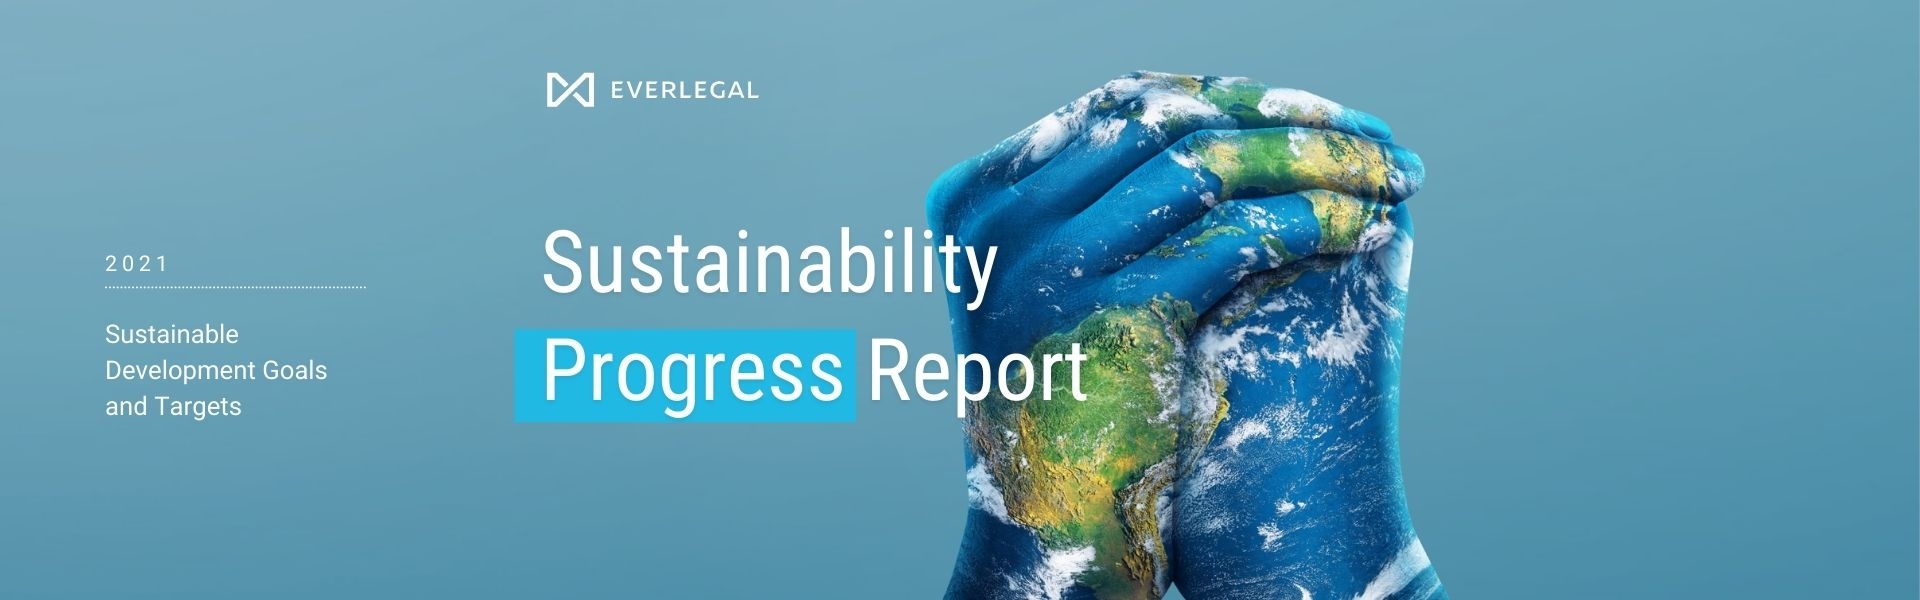 Sustainability Progress Report 2021